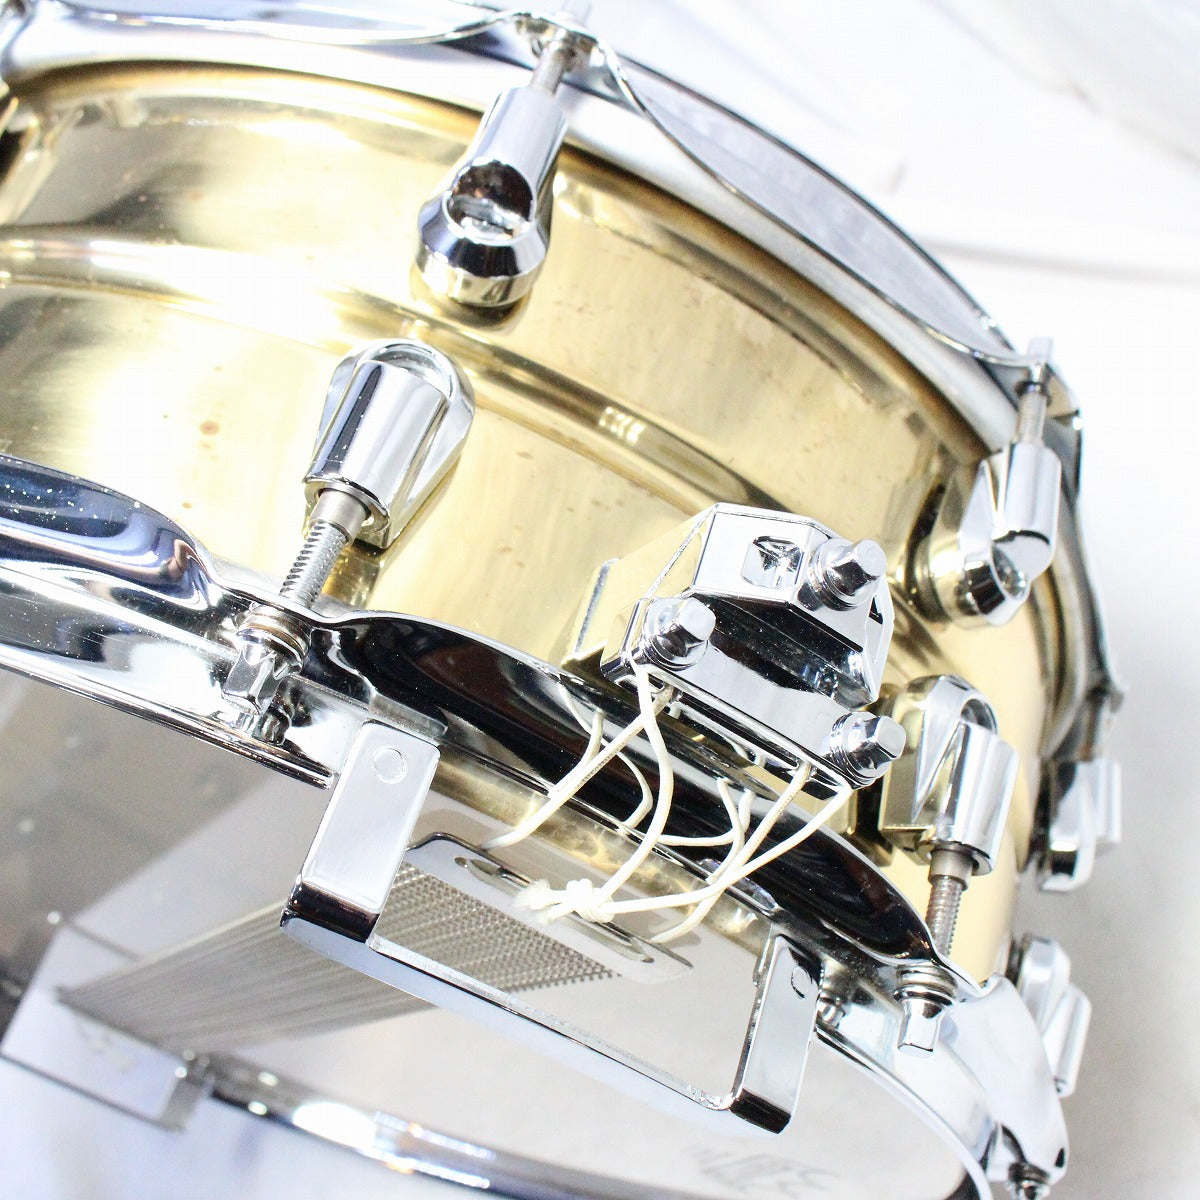 USED YAMAHA / SD4455 Brass Snare 14×5.5 Yamaha Snare Drum [08]